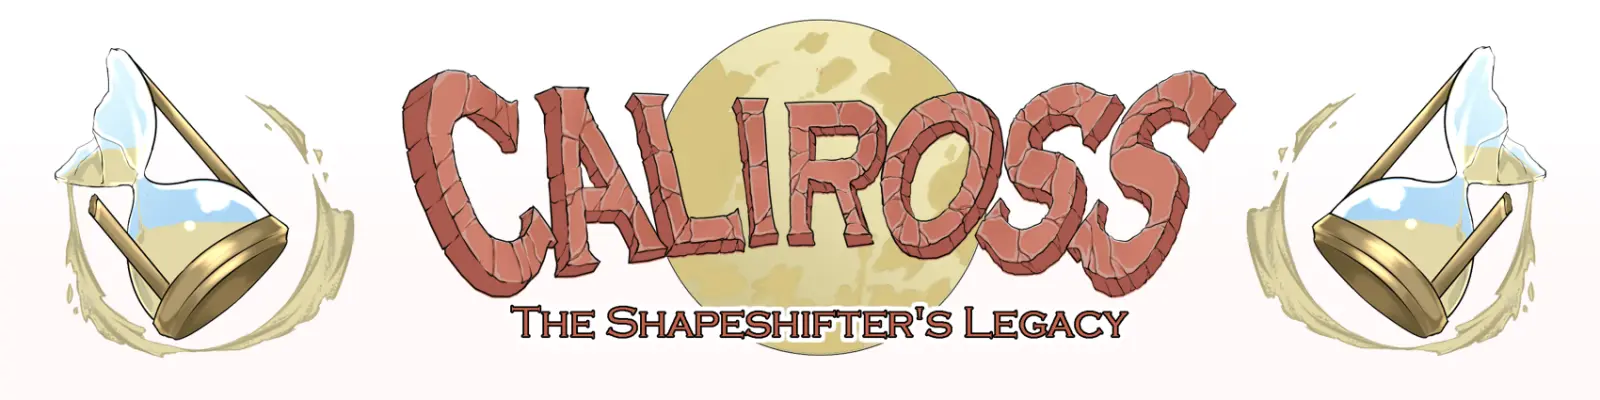 Caliross, The Shapeshifter's Legacy [v0.97.1b] main image